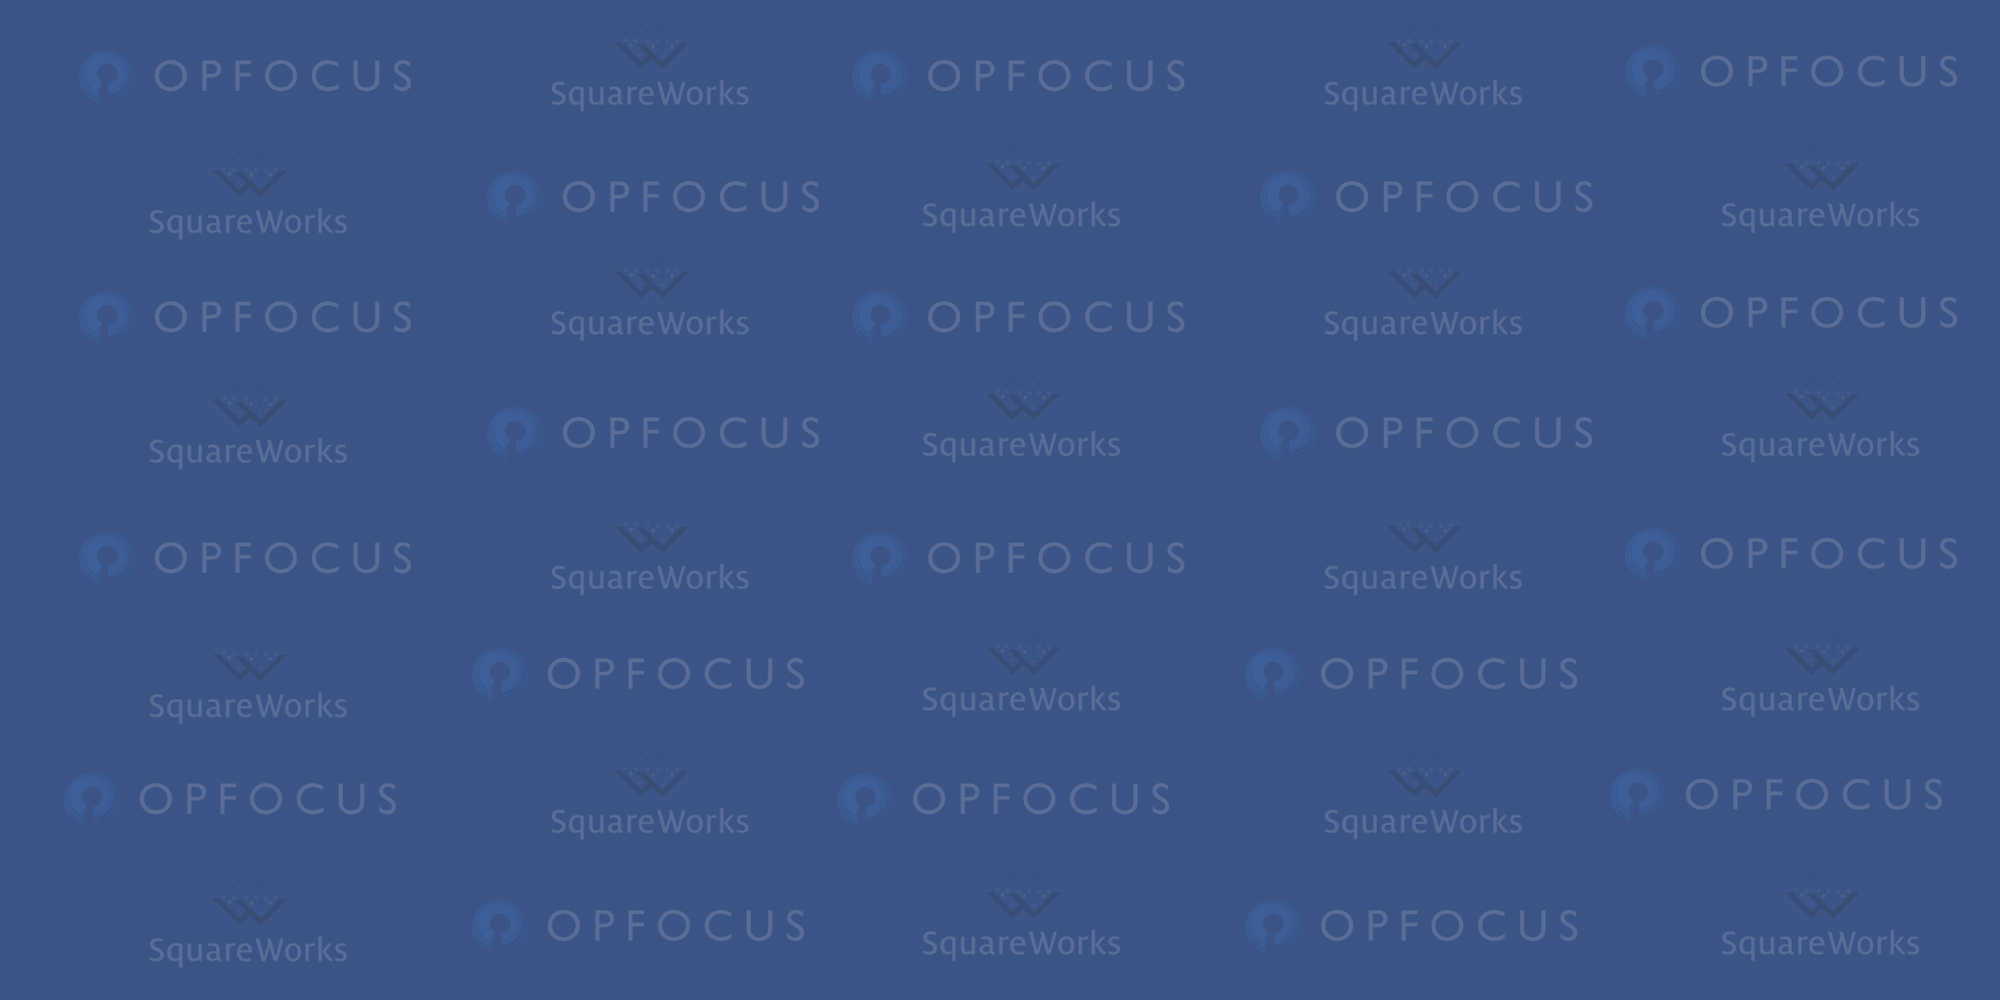 OpFocus - SquareWorks Partnership